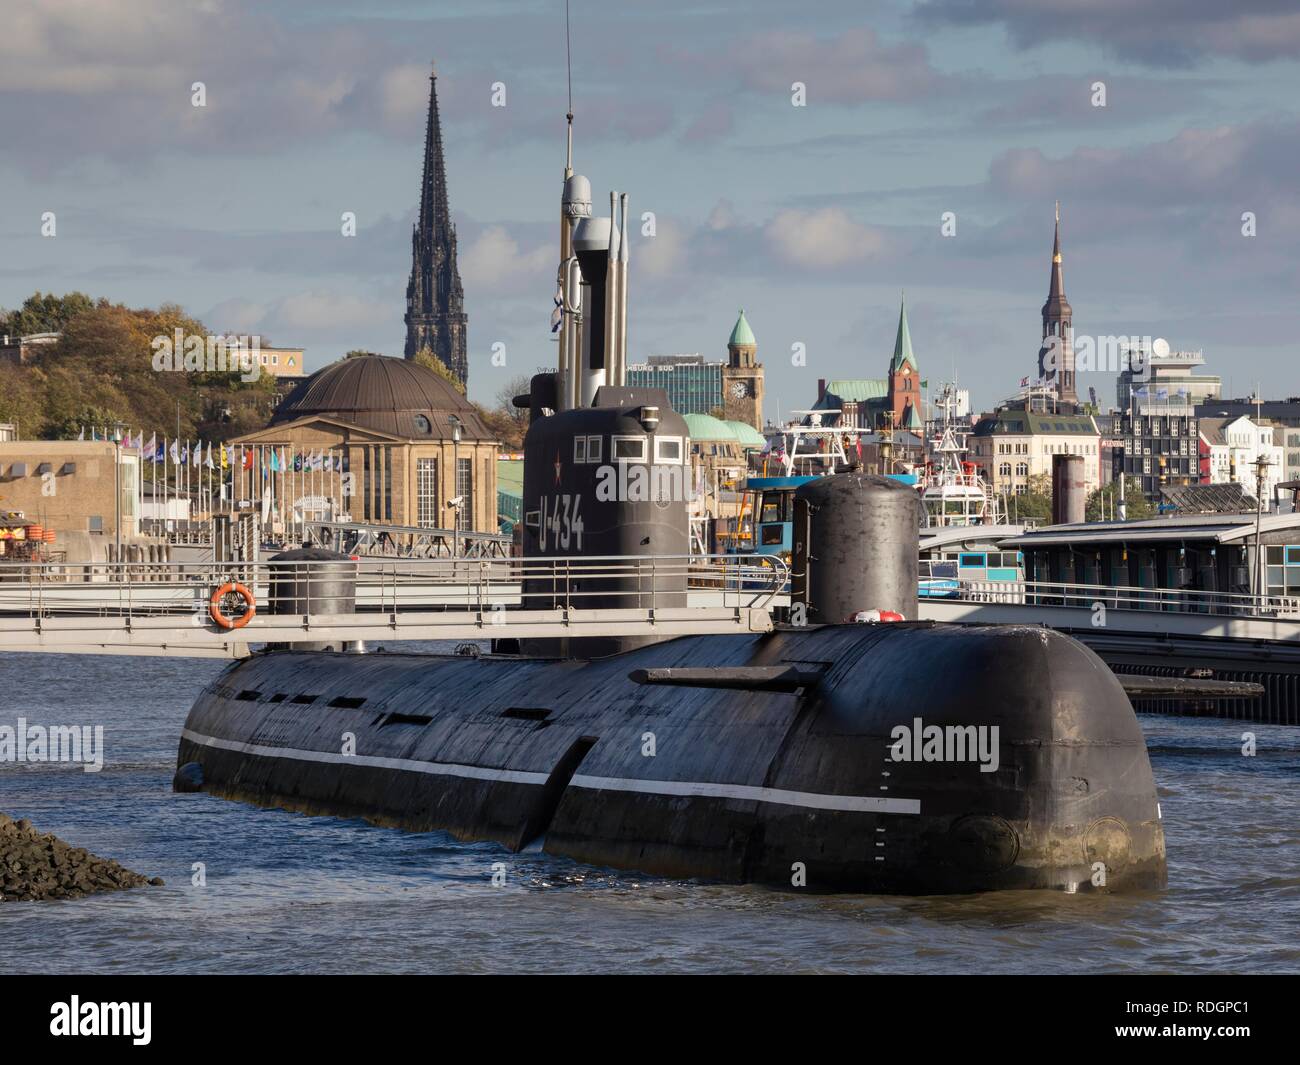 U-boat 434, U-boat museum, harbour, St. Pauli Piers, St. Pauli, Hamburg, Germany Stock Photo